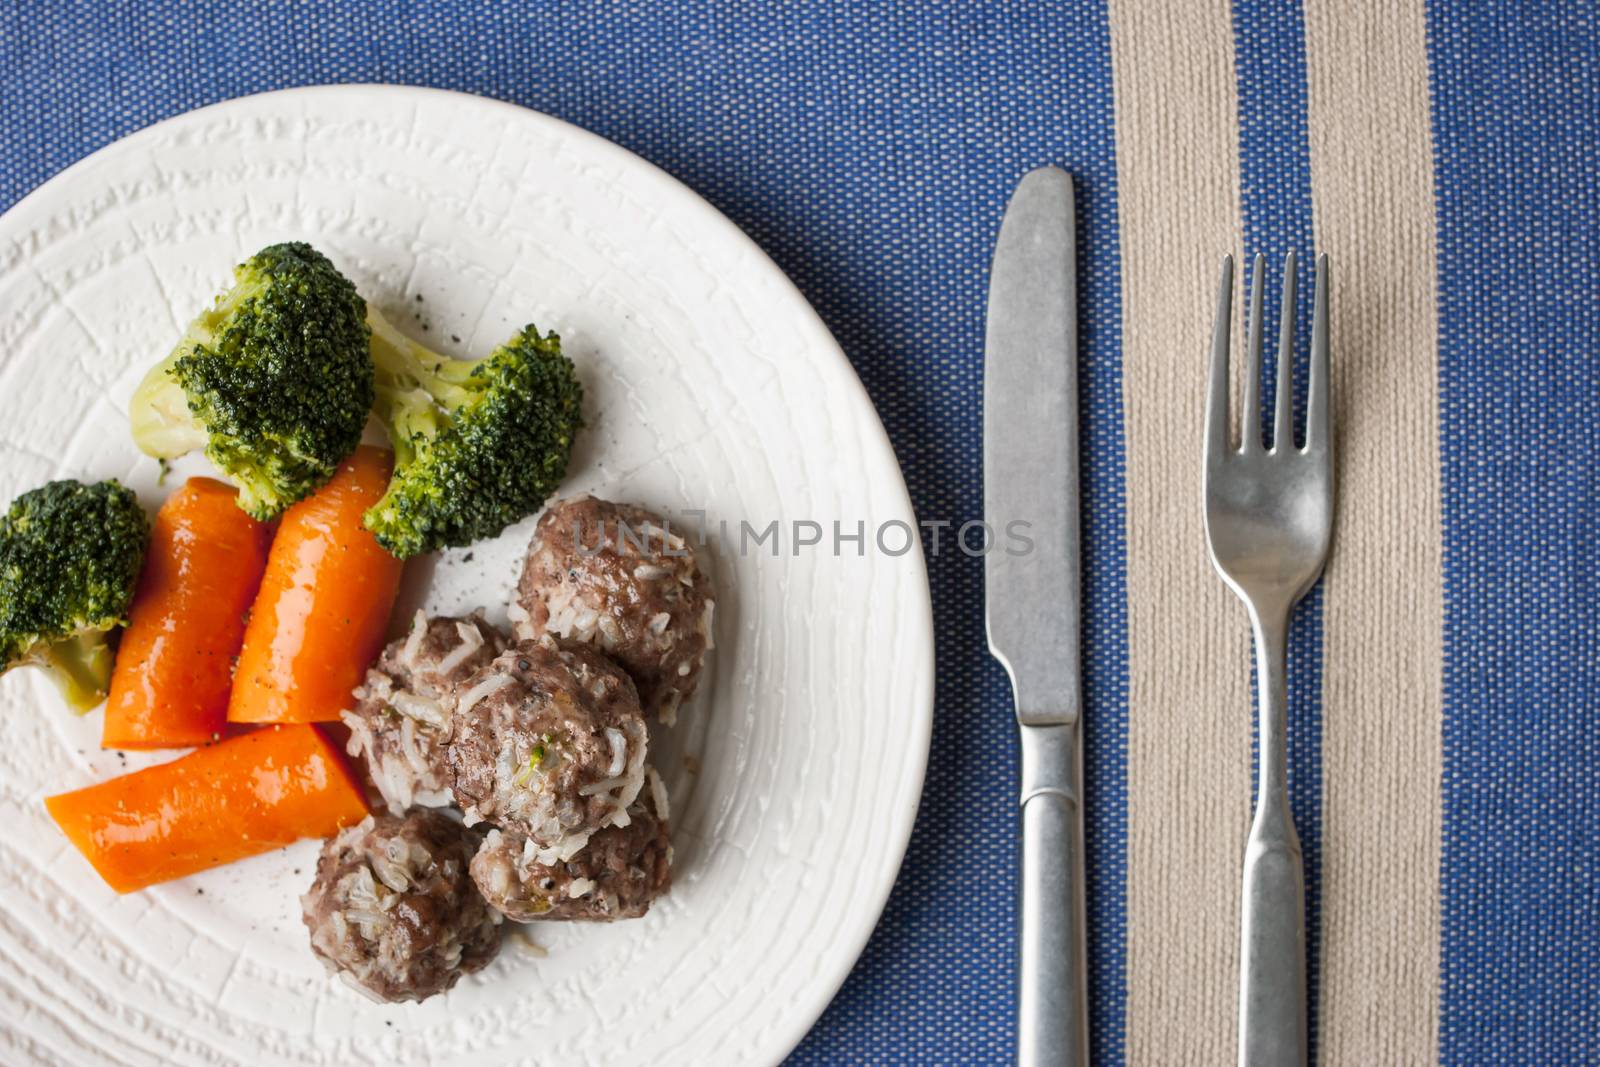 Broccoli , carrots and meatballs by Deniskarpenkov